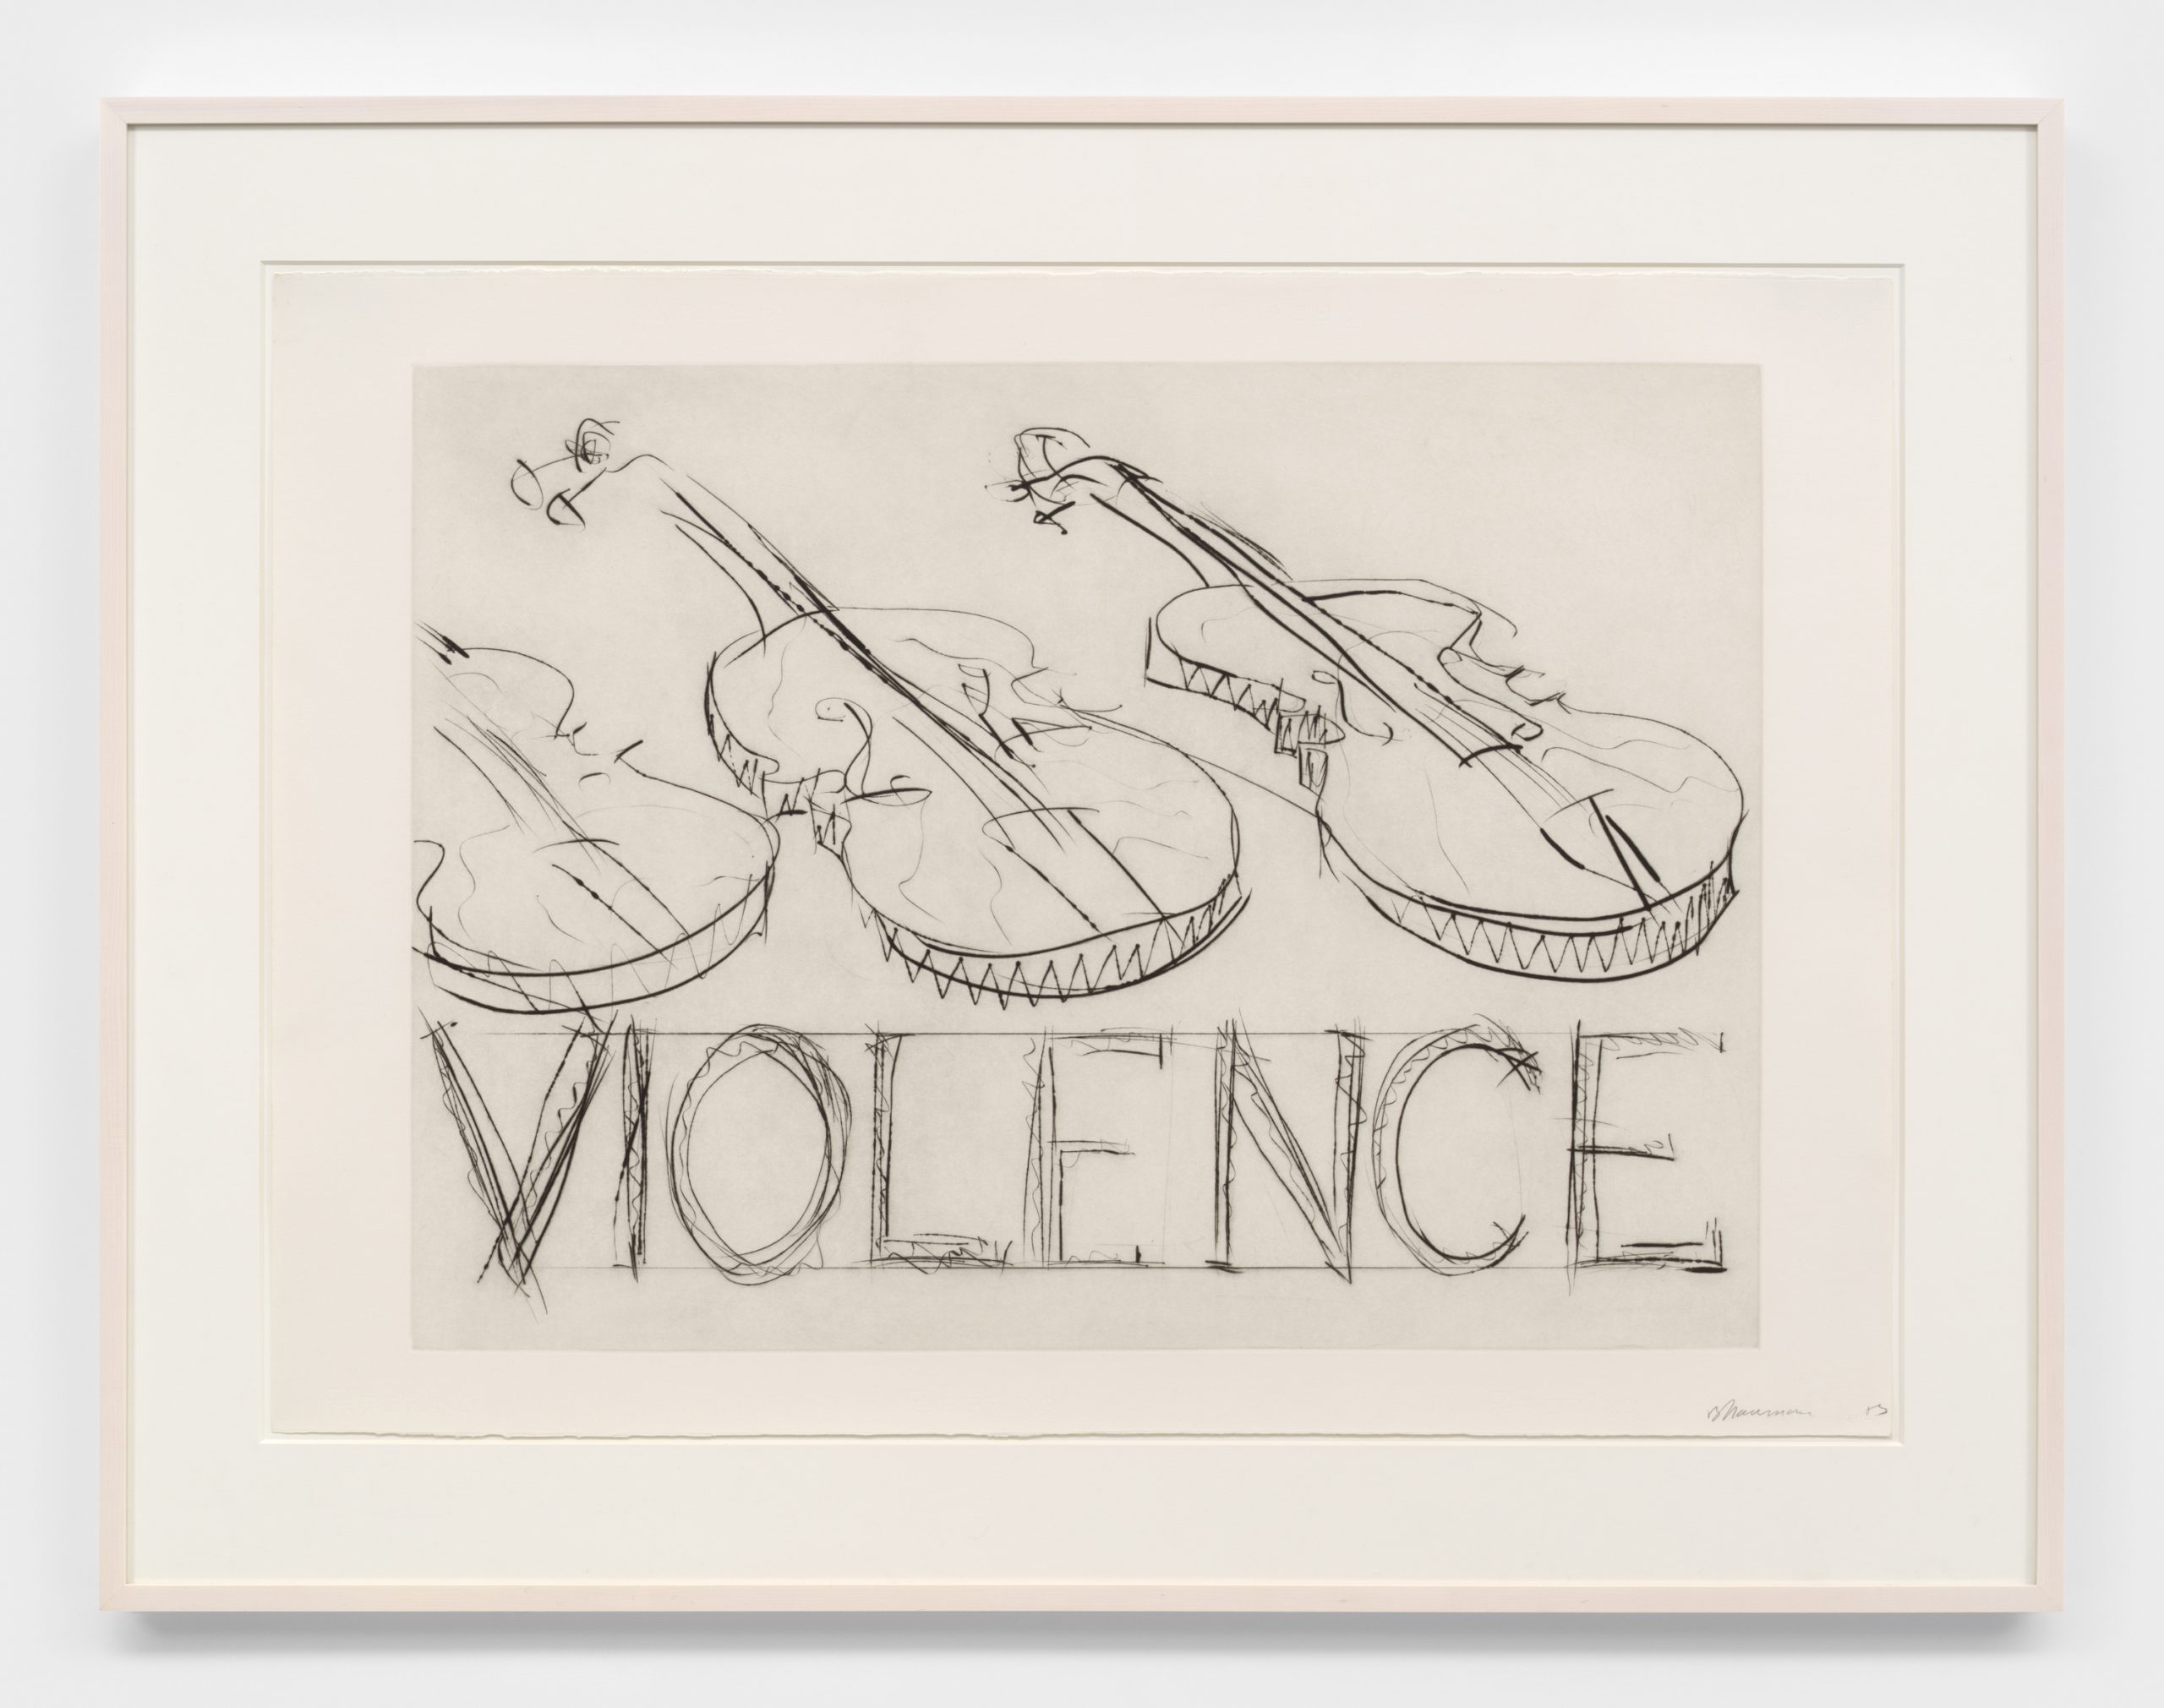 Violins/Violence by Bruce Nauman